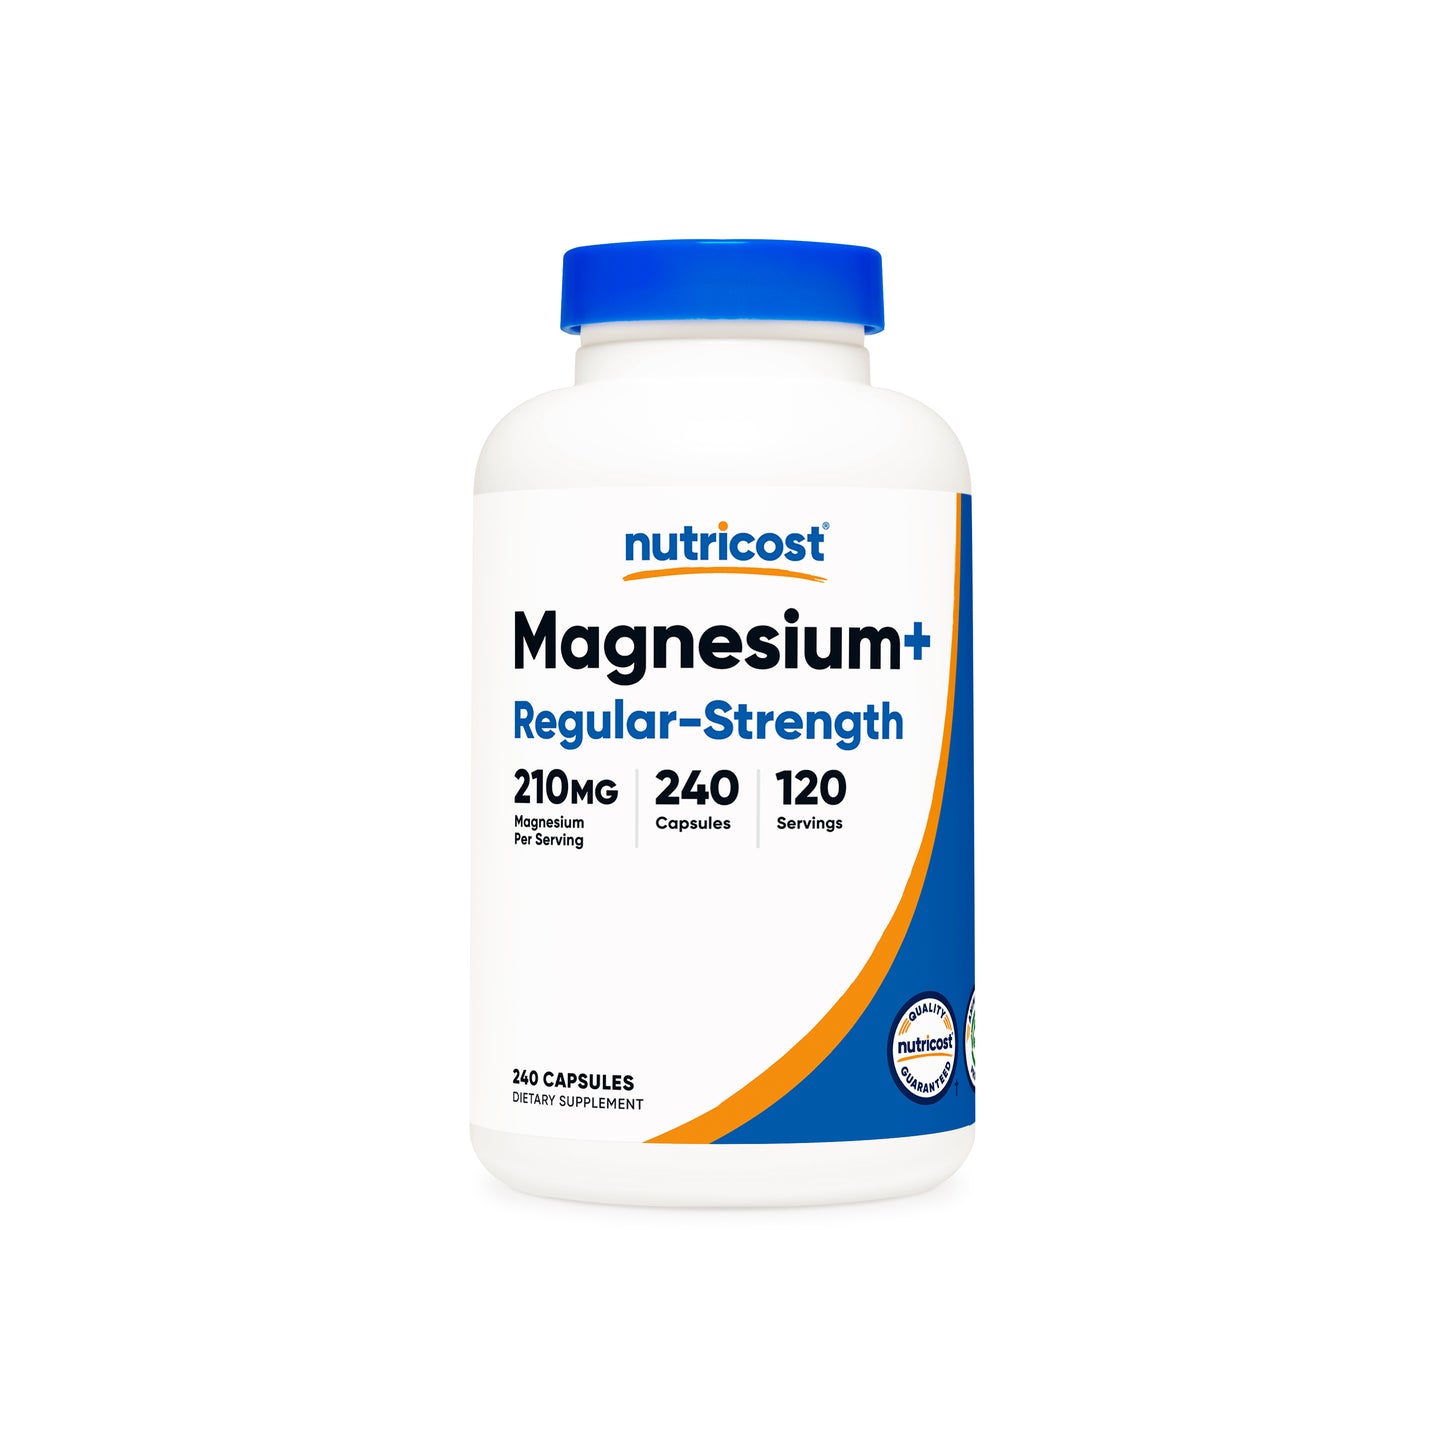 Nutricost Magnesium+ Regular Strength